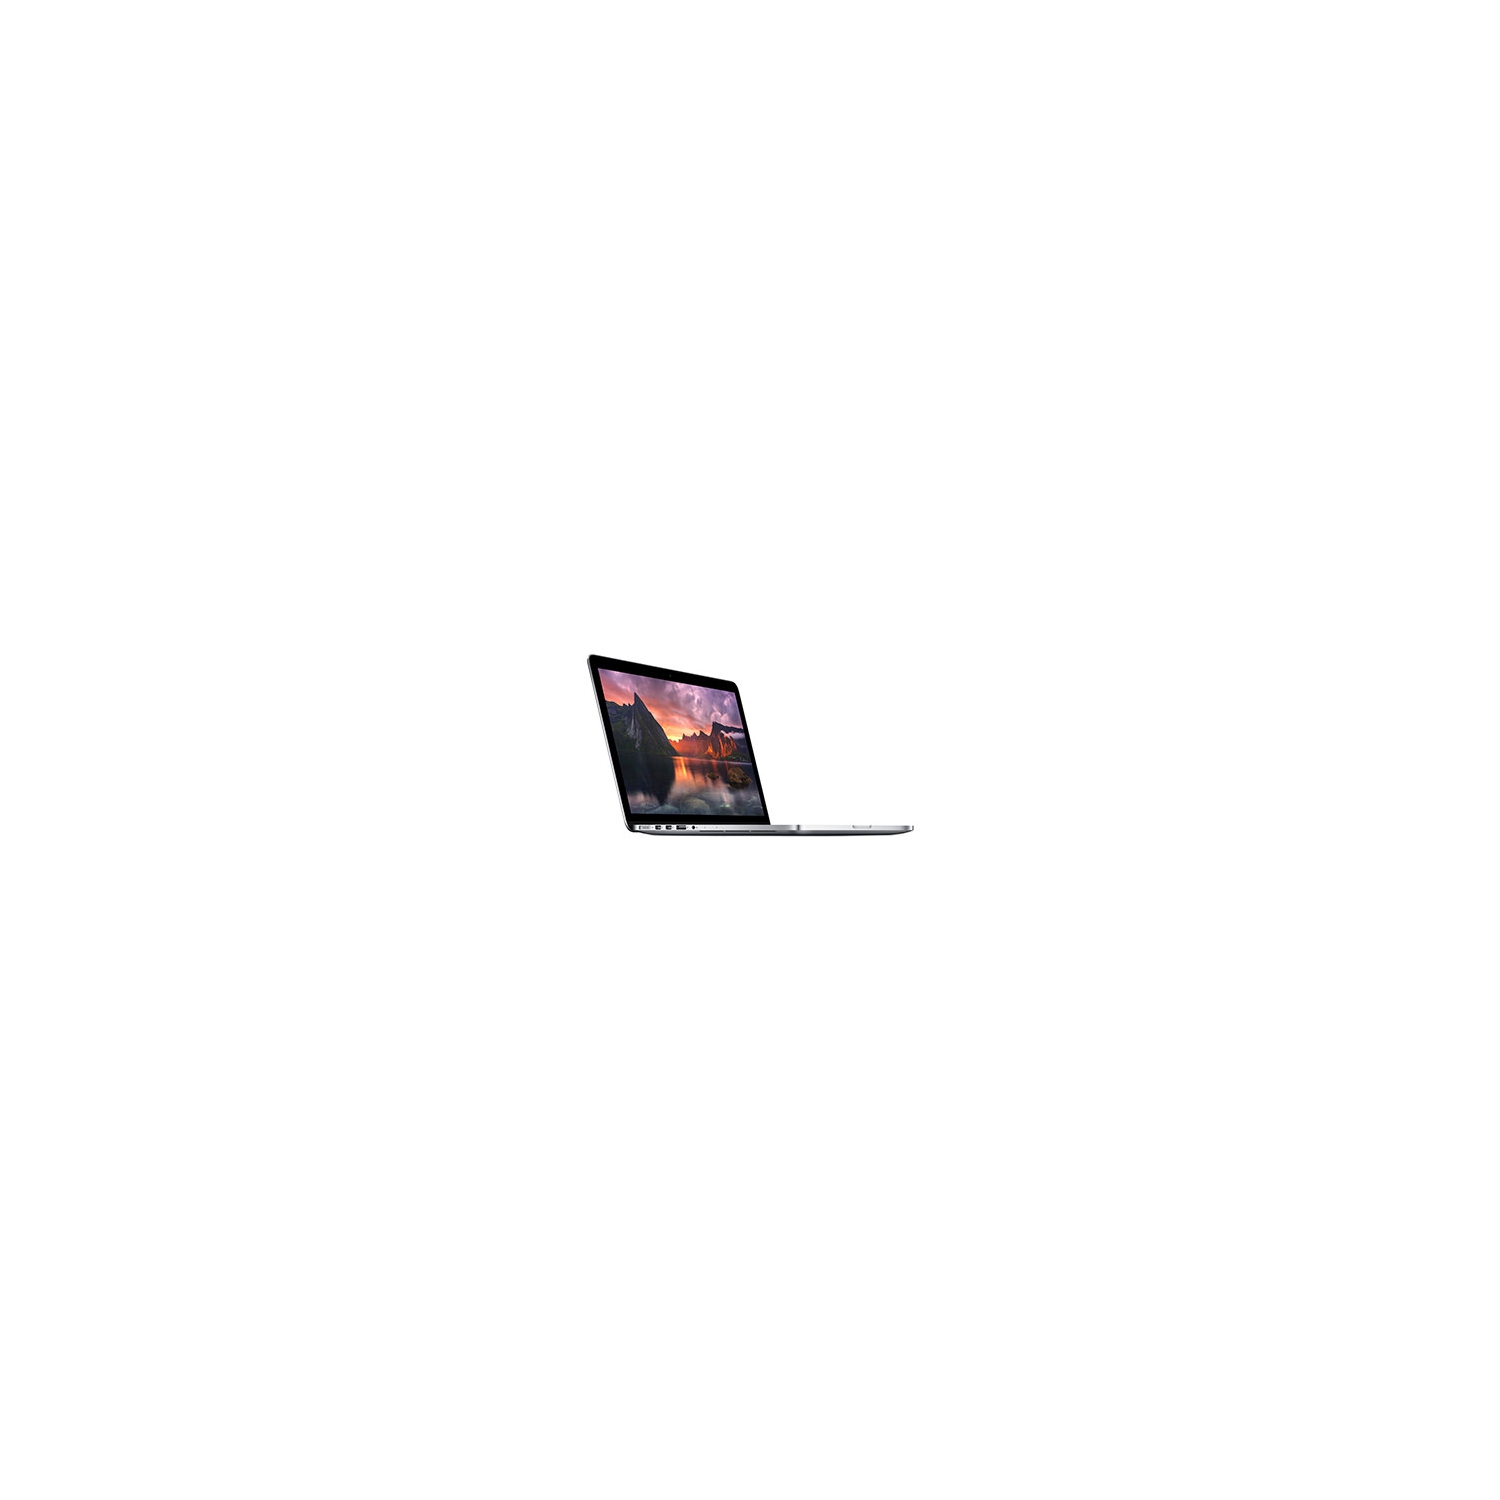 Refurbished (Excellent) - MacBook Pro 15" Retina Display (Intel Core i7 CPU, 16GB RAM, 512GB, 2015 Model)